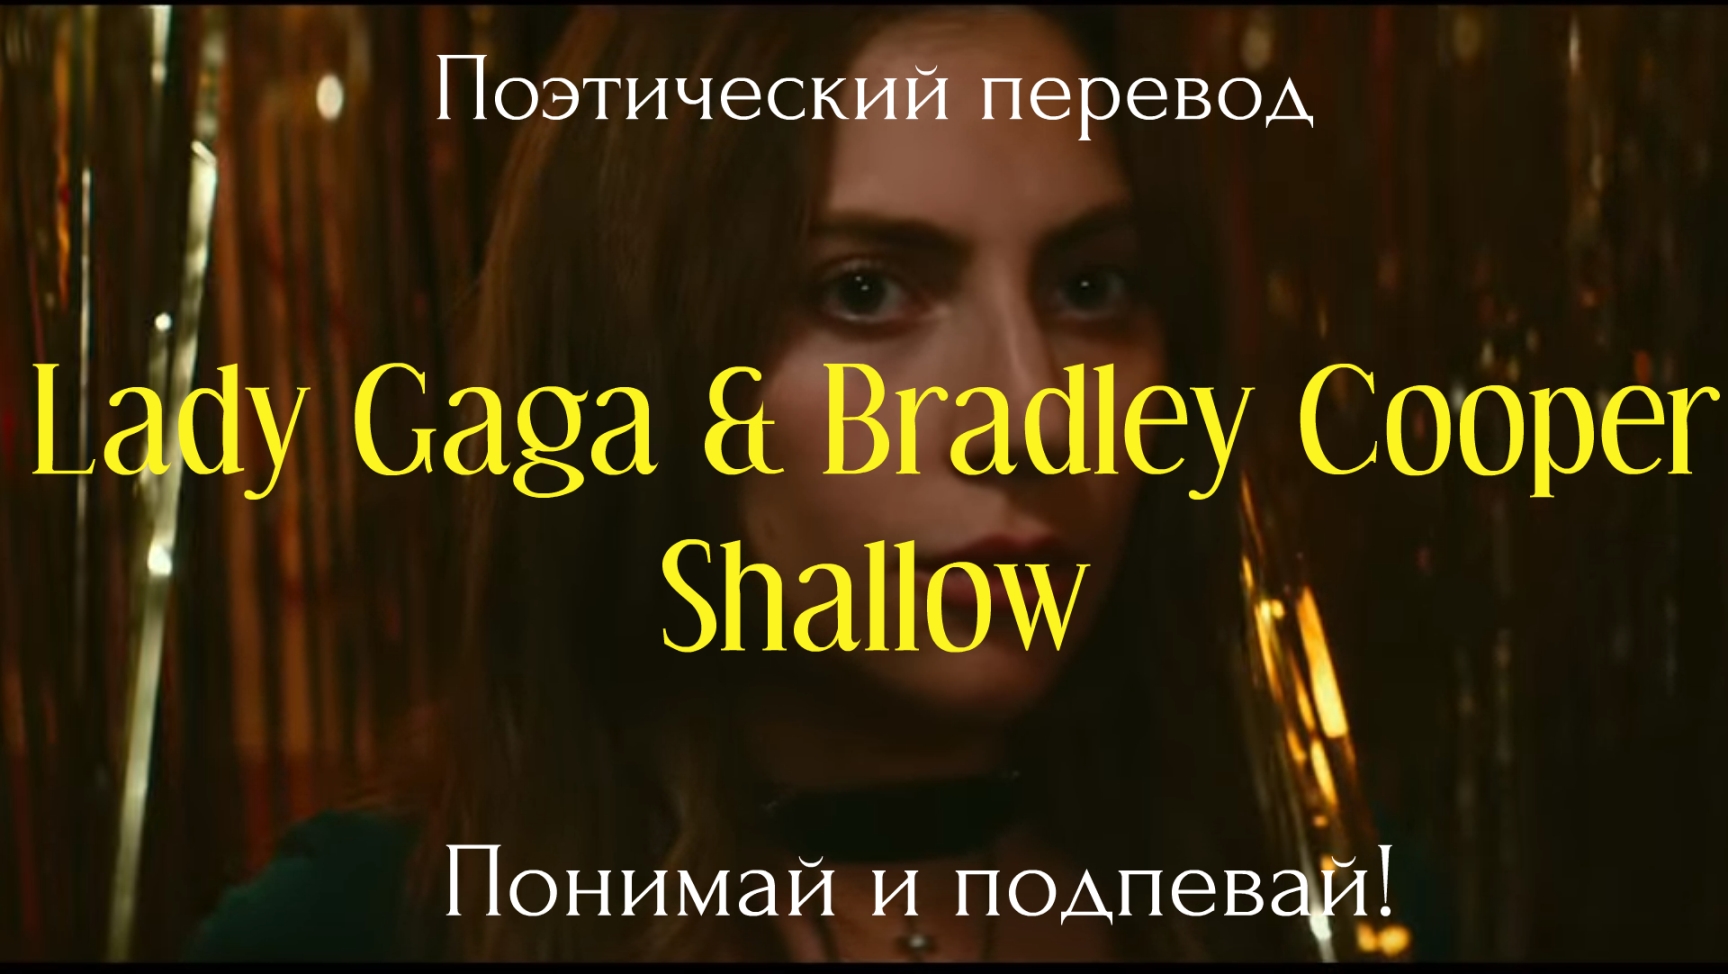 Shallow леди гага перевод. Lady Gaga, Bradley Cooper shallow перевод. Слова леди Гага и Брэдли Купер. Леди Гага и Брэдли Купер песня текст. Shallow перевод.